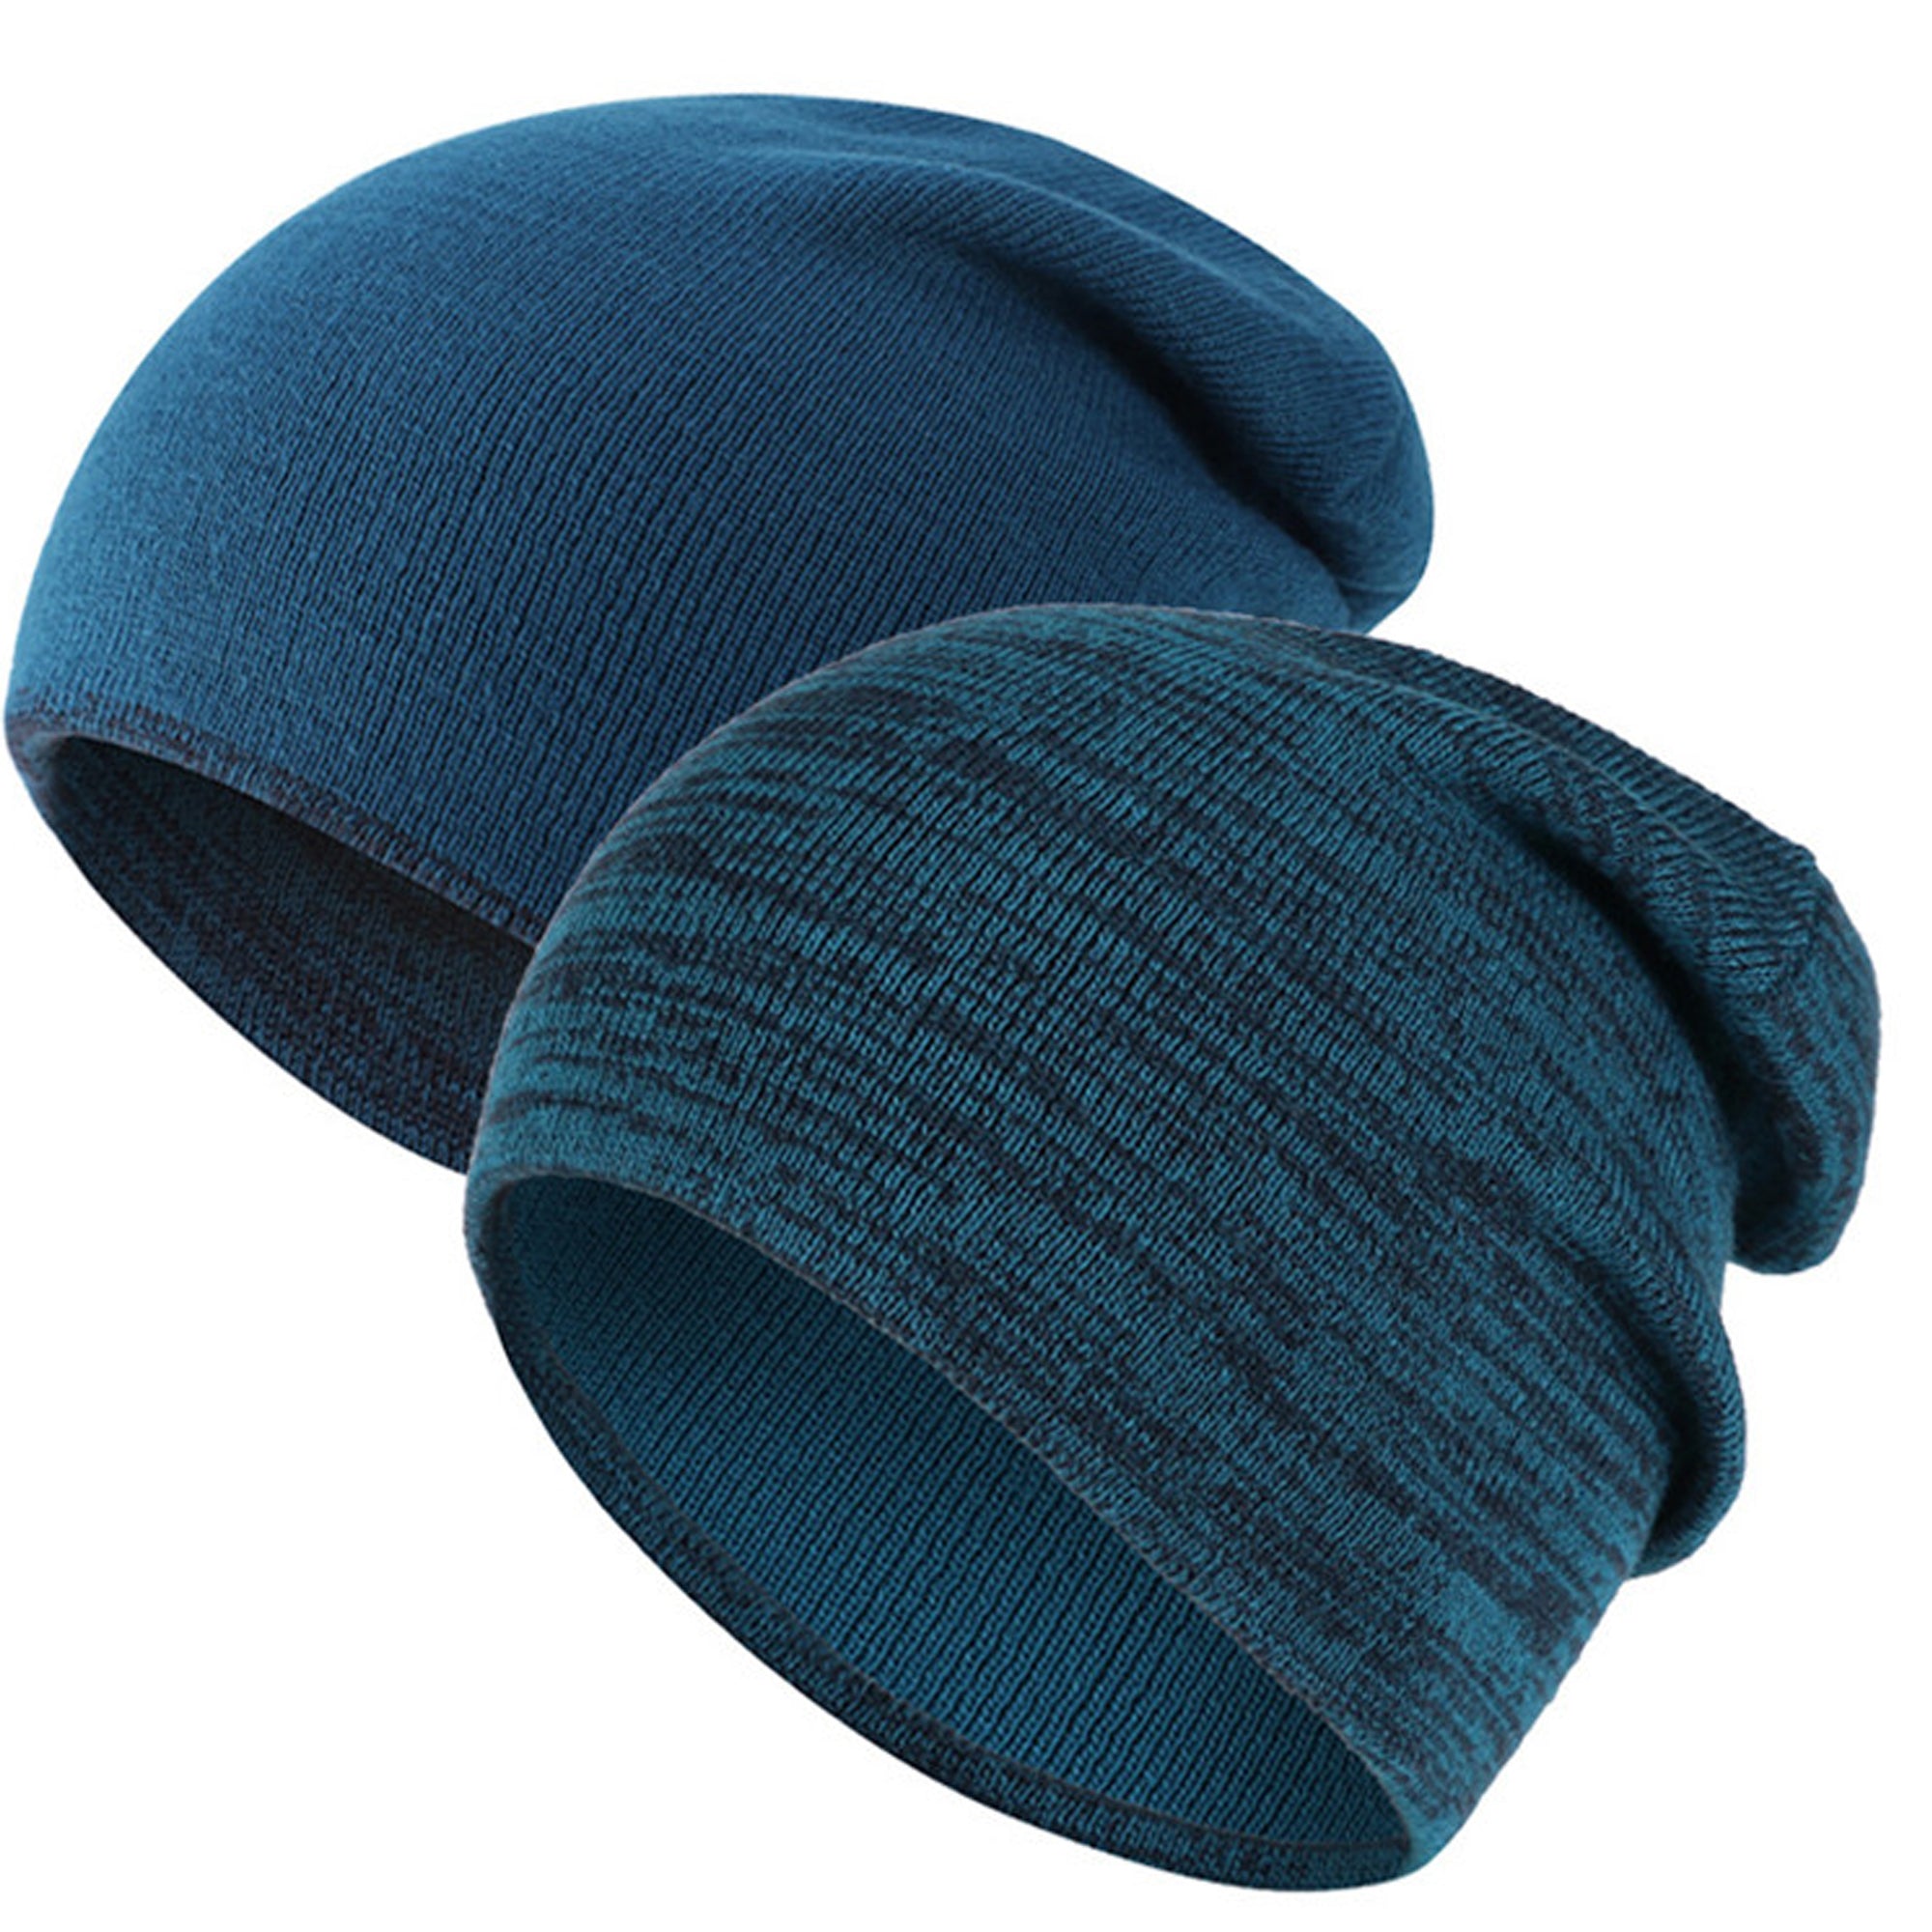 SOBEYO Unisex Reversible Beanie One-Tone Sweater Knit Warm Soft Hats B